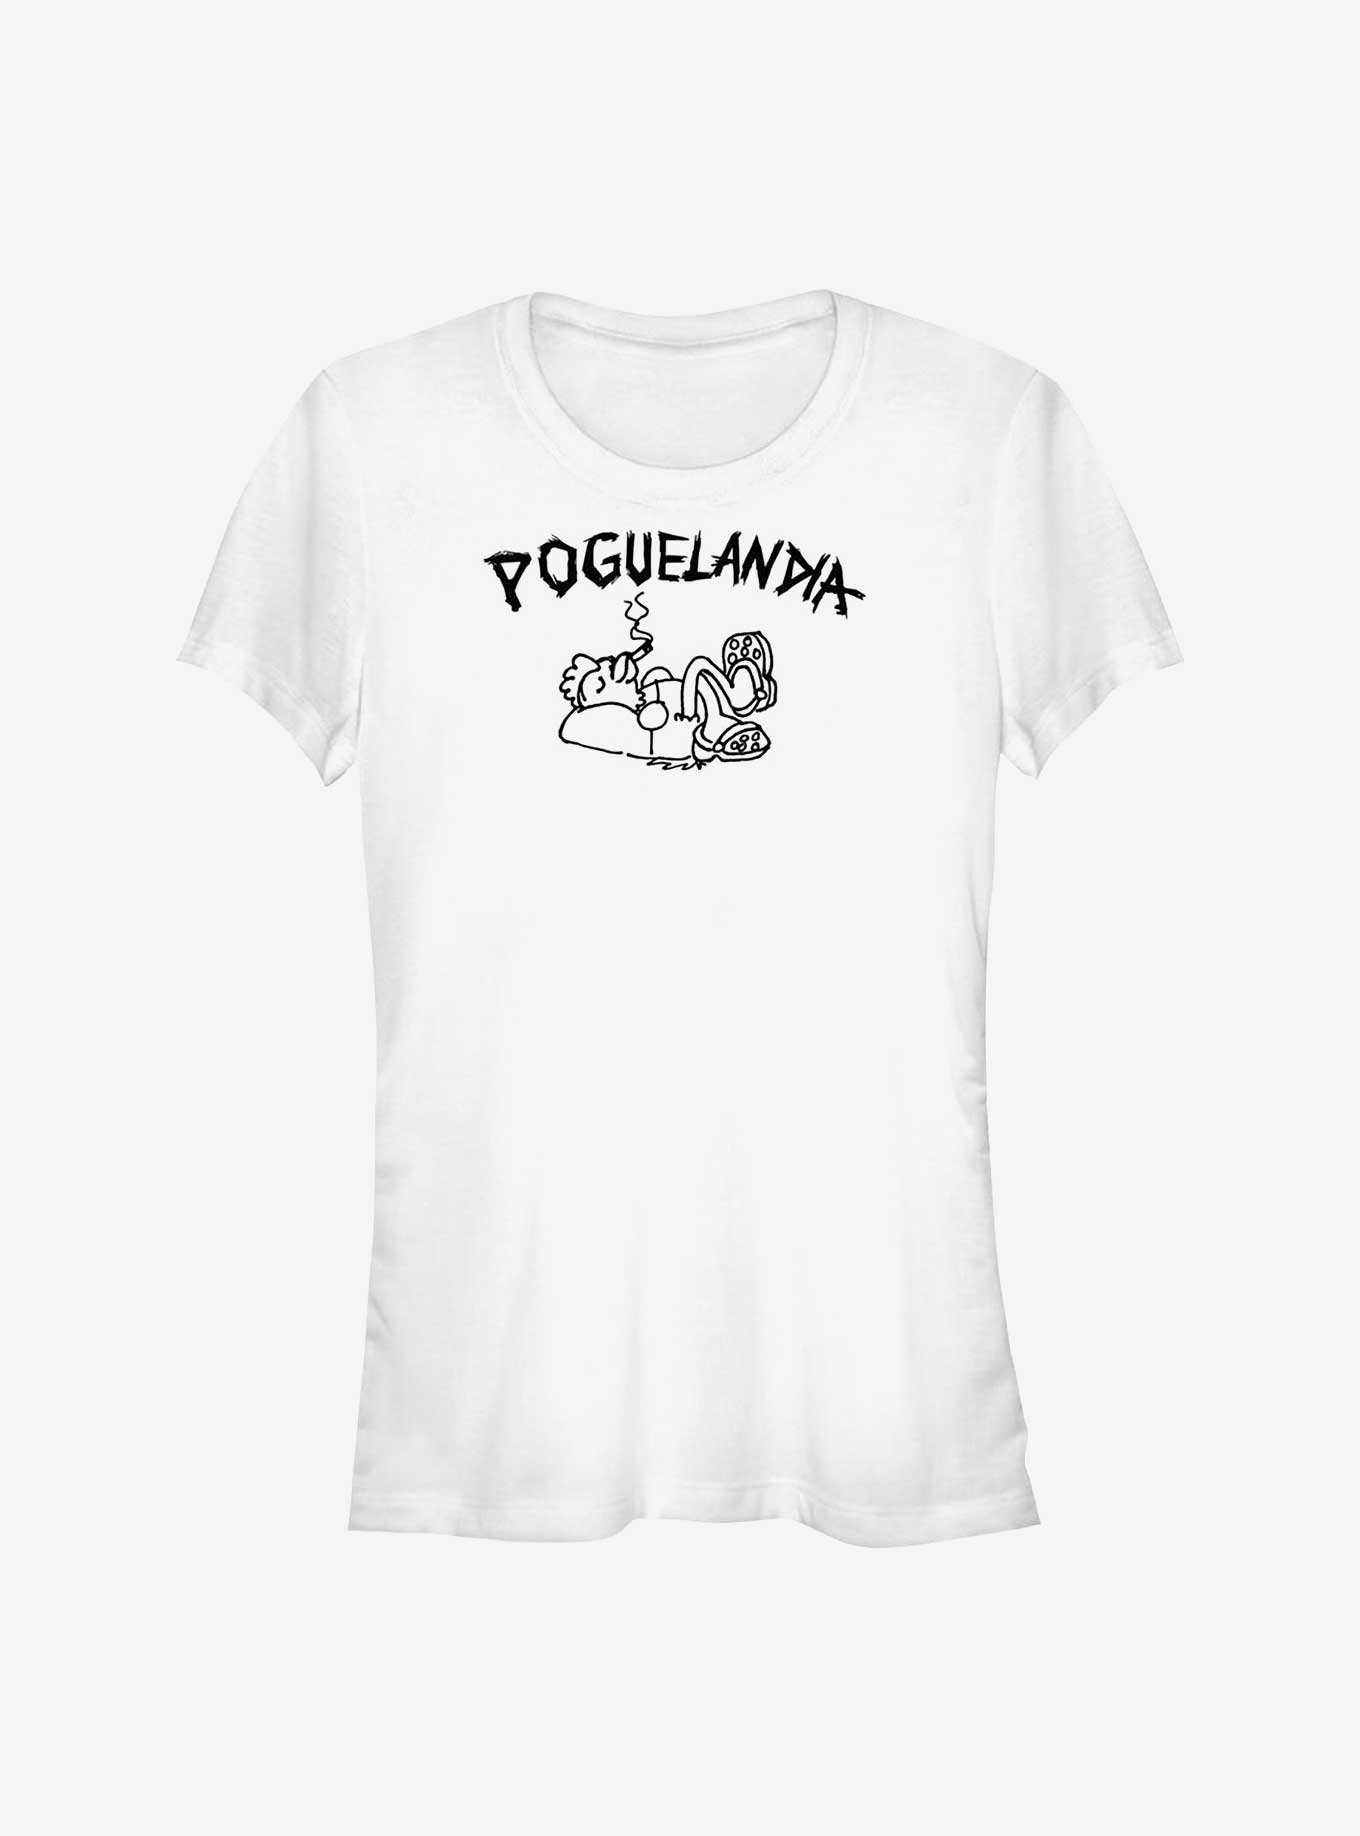 Outer Banks Poguelandia Life Girls T-Shirt, , hi-res